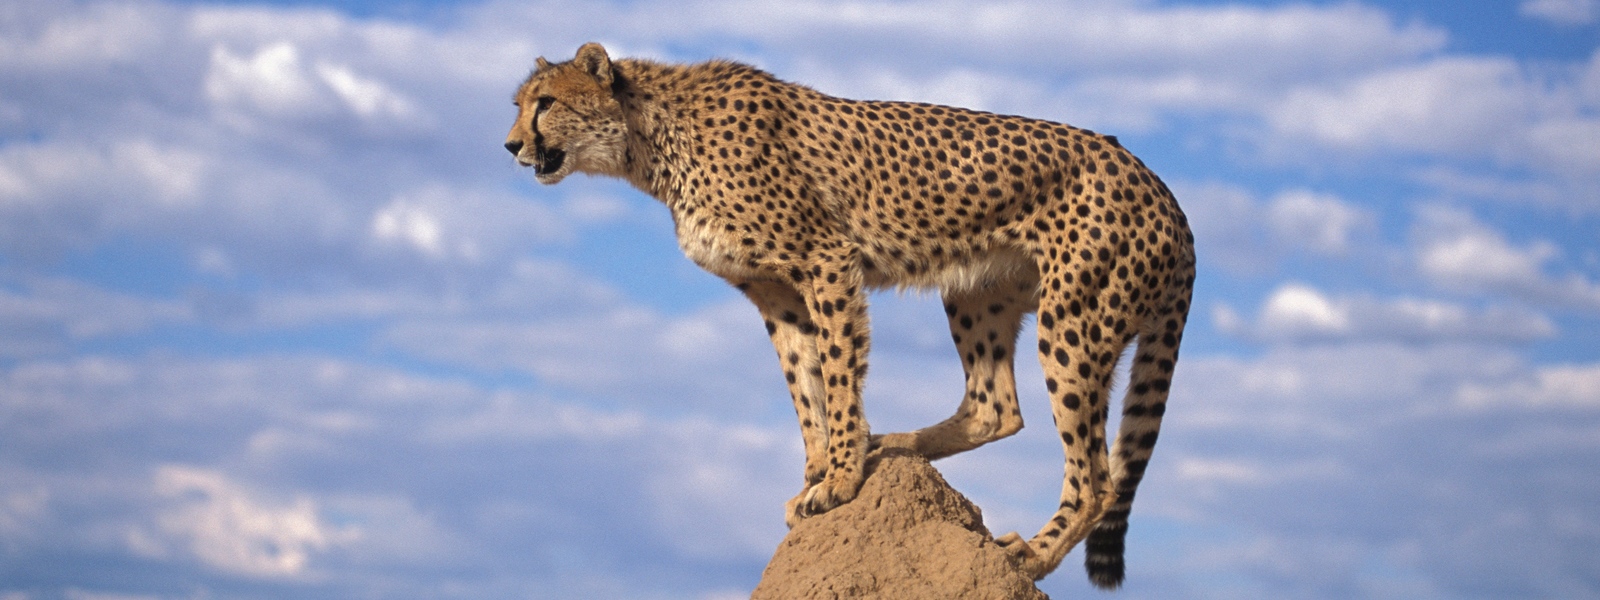 Cheetah_2.jpg